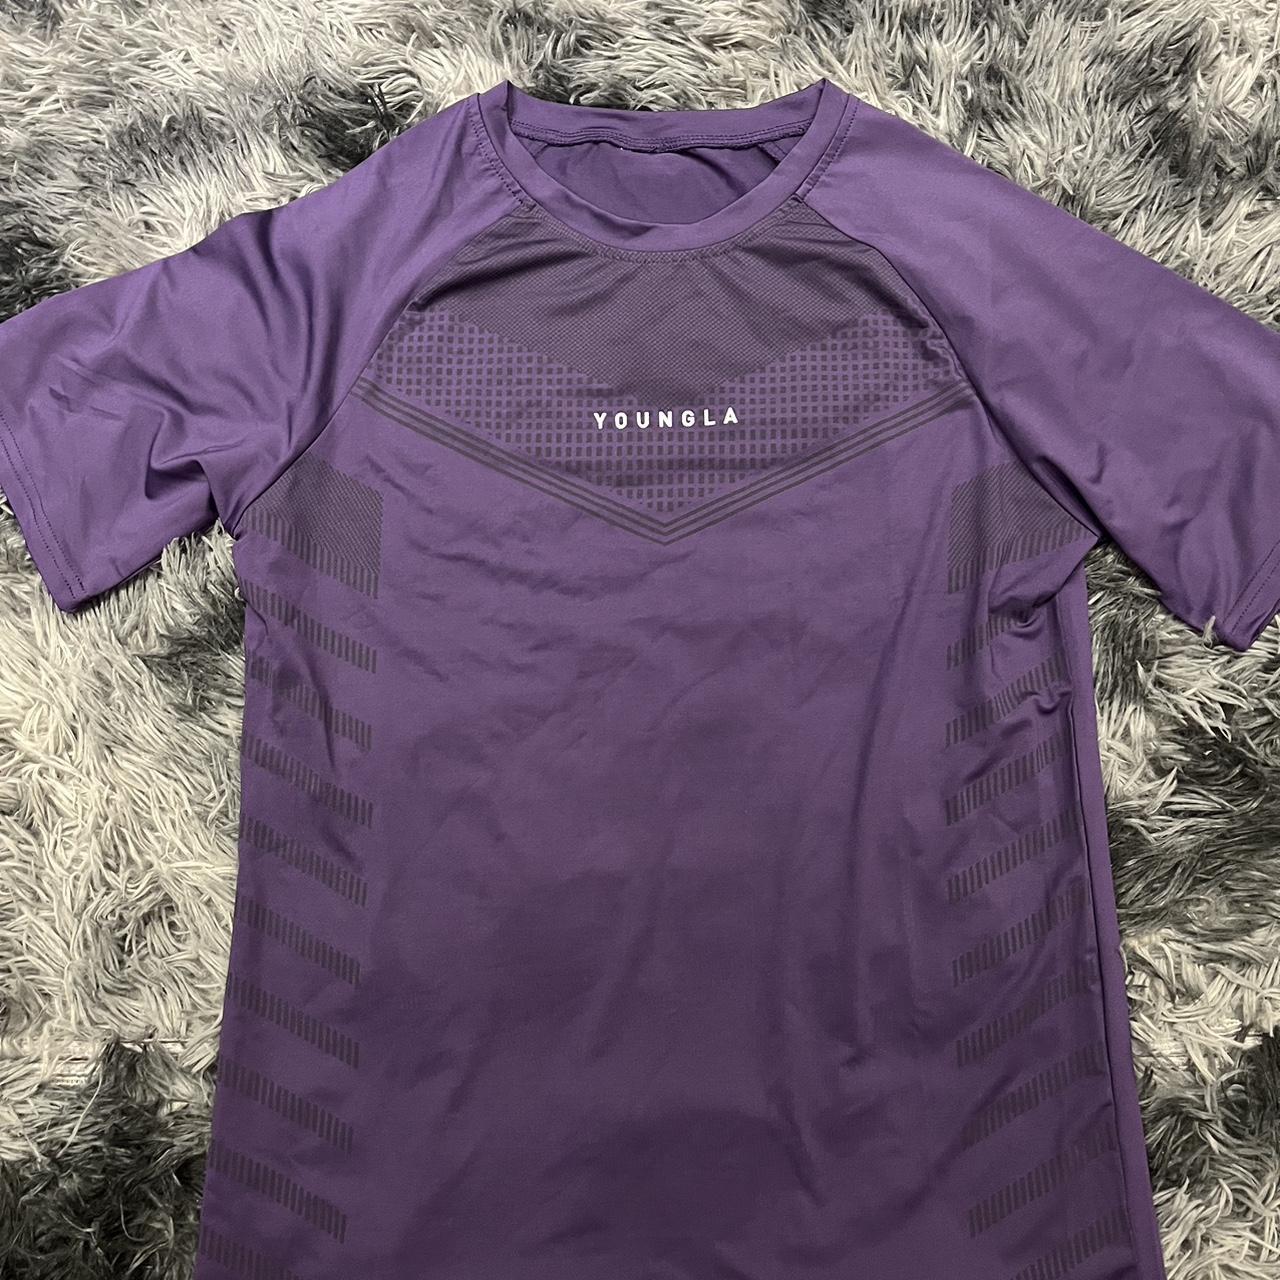 YoungLA, Shirts, Youngla Purple Superhero Compression Shirt Size Medium